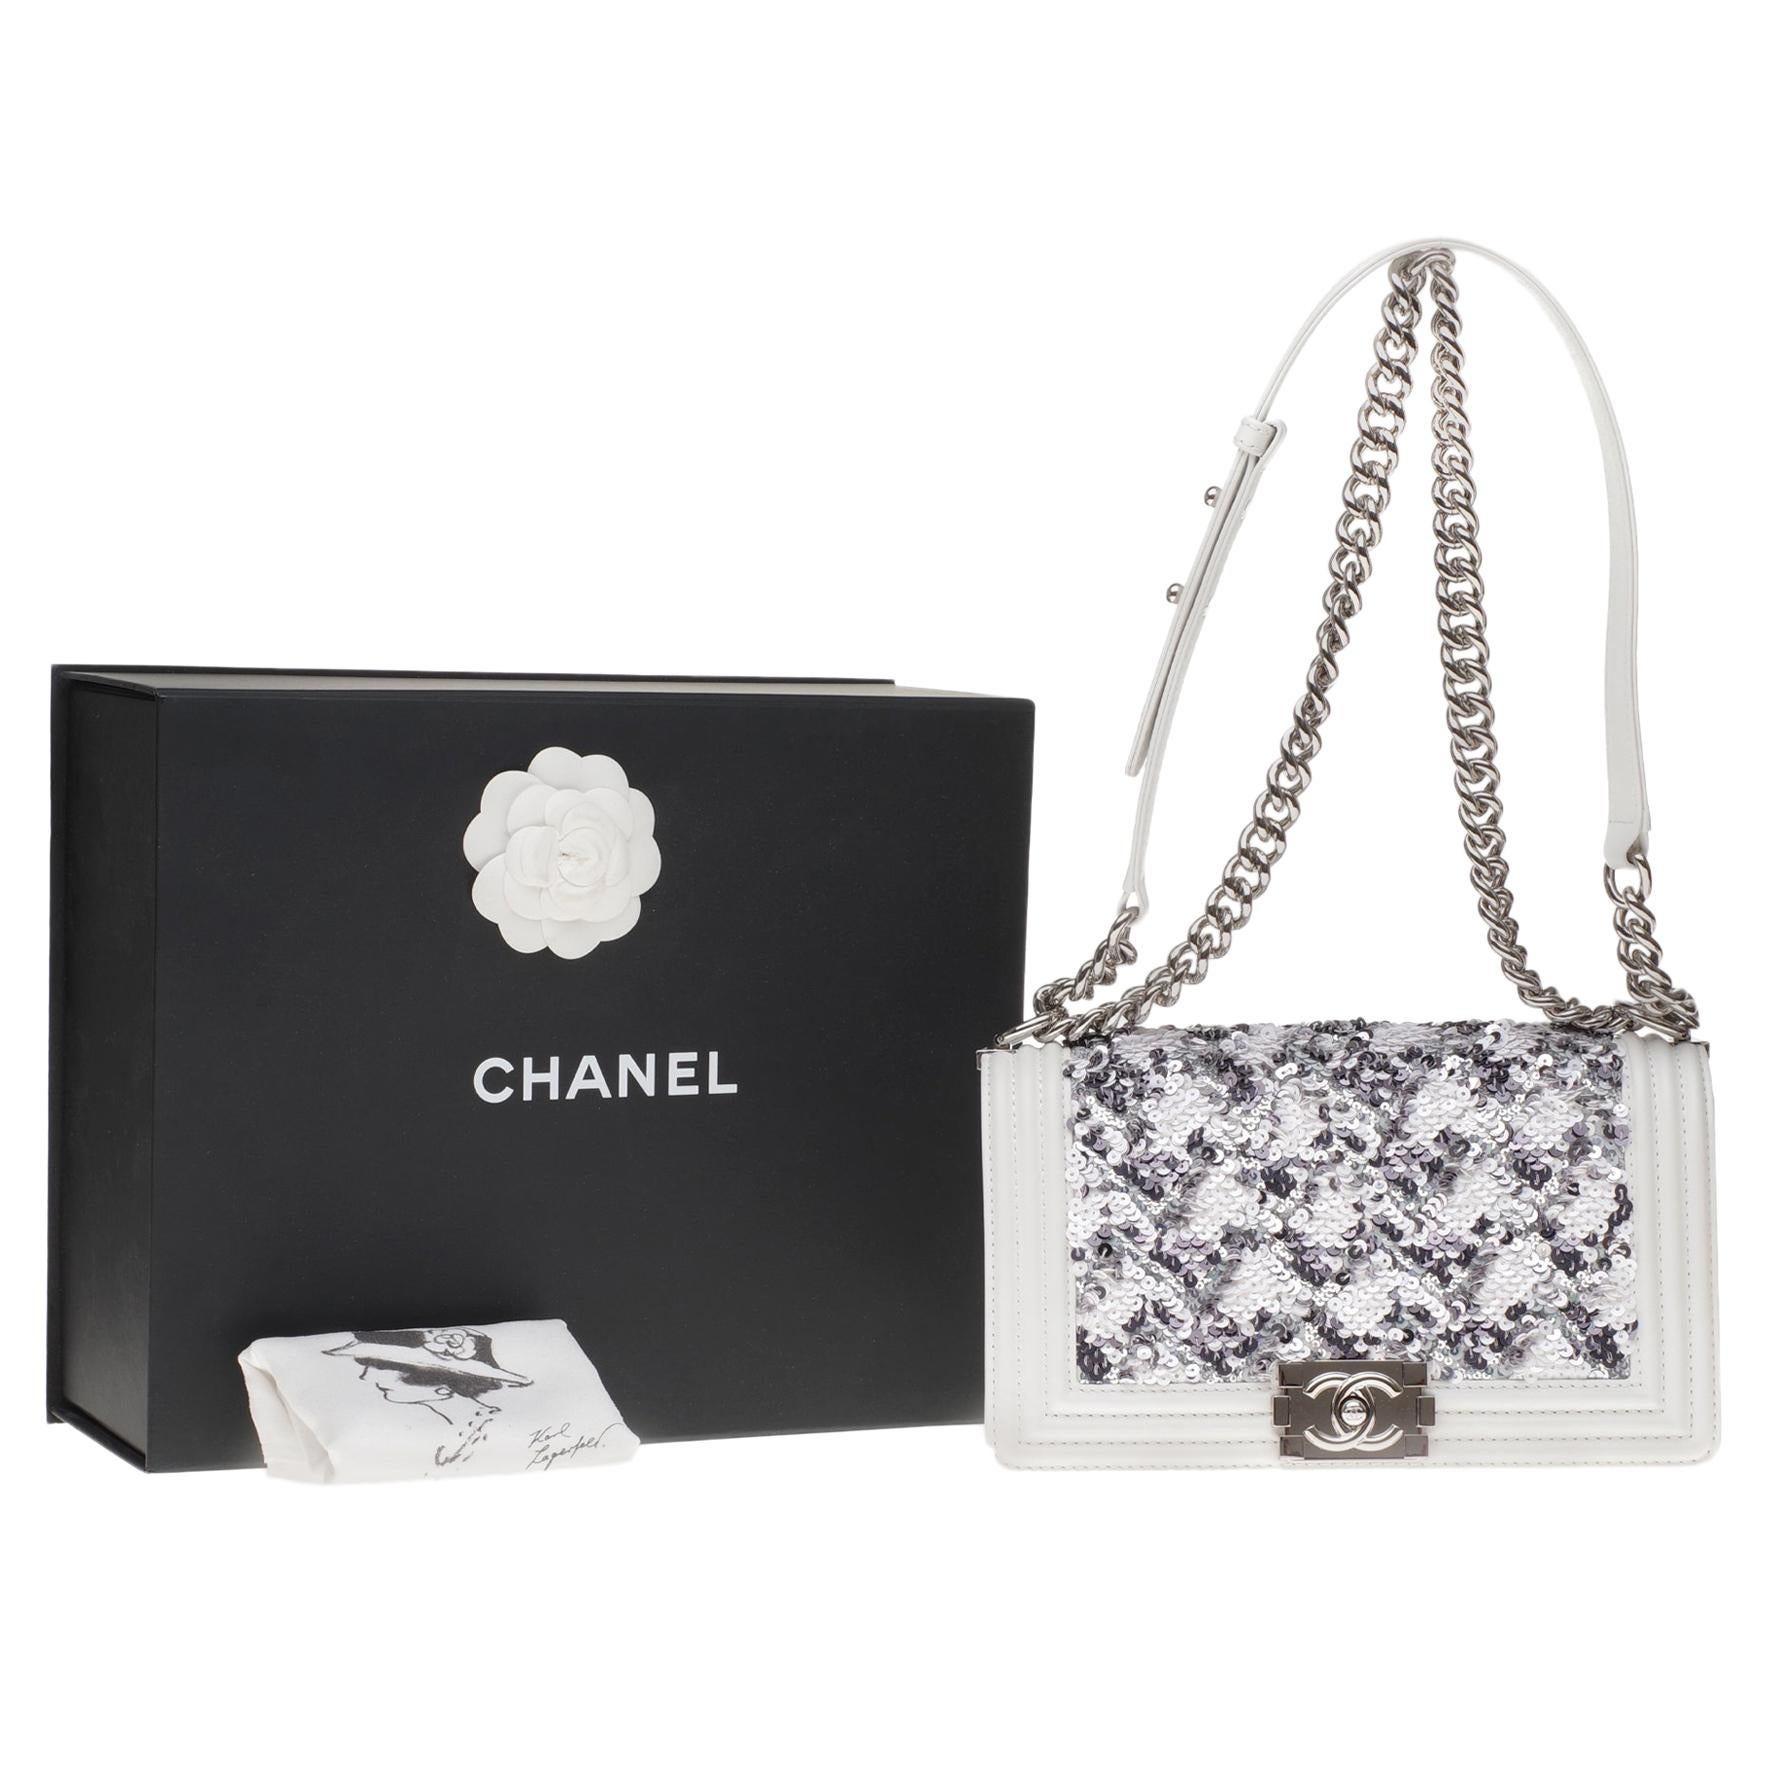 Chanel boy medium size shoulder bag in white and grey sequins